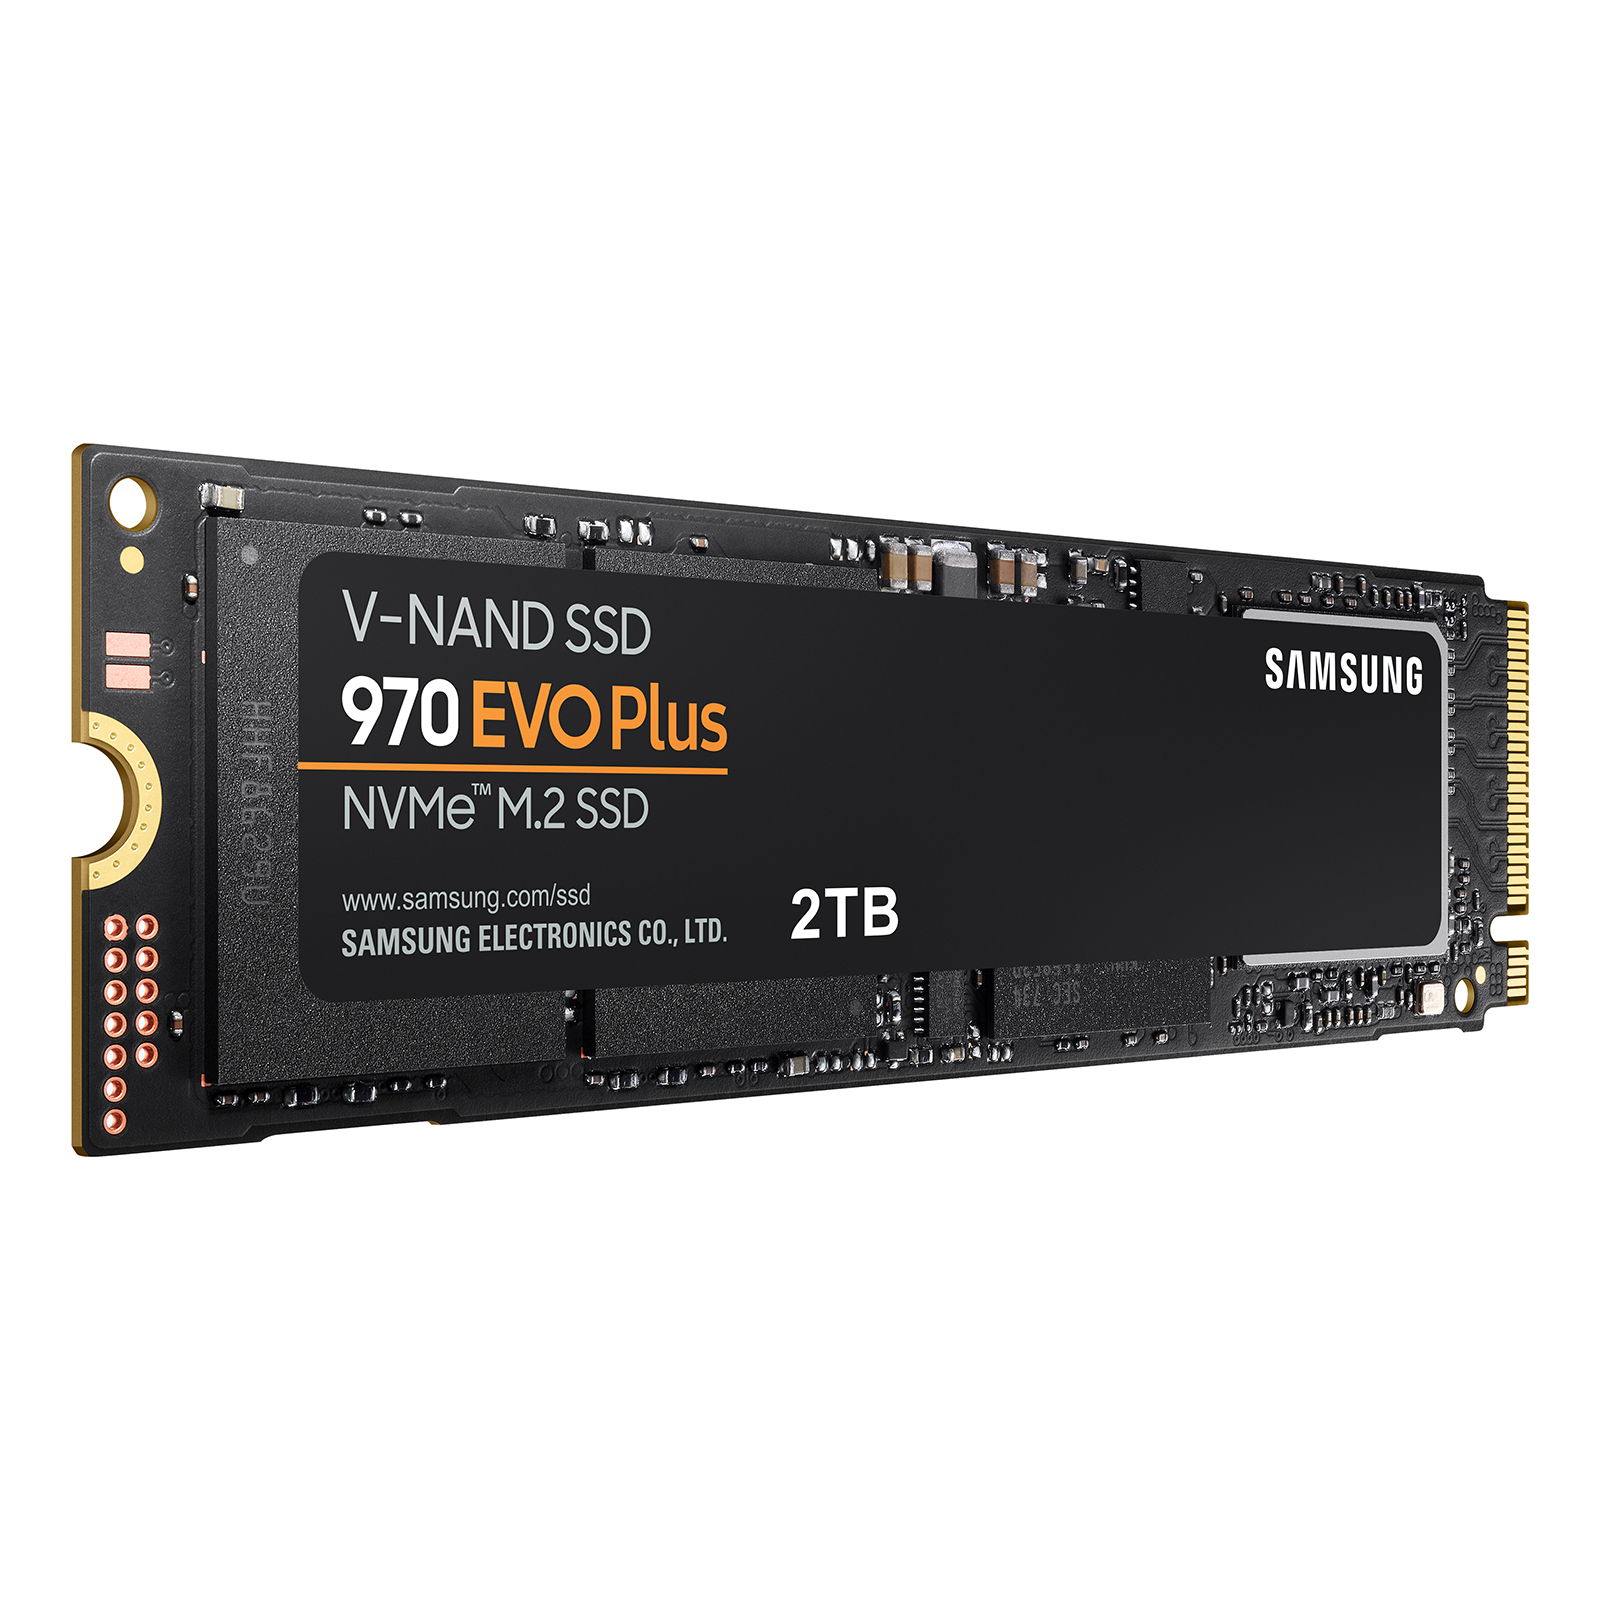 SUMSUNG 970 EVO Plus NVMe M.2 250GB